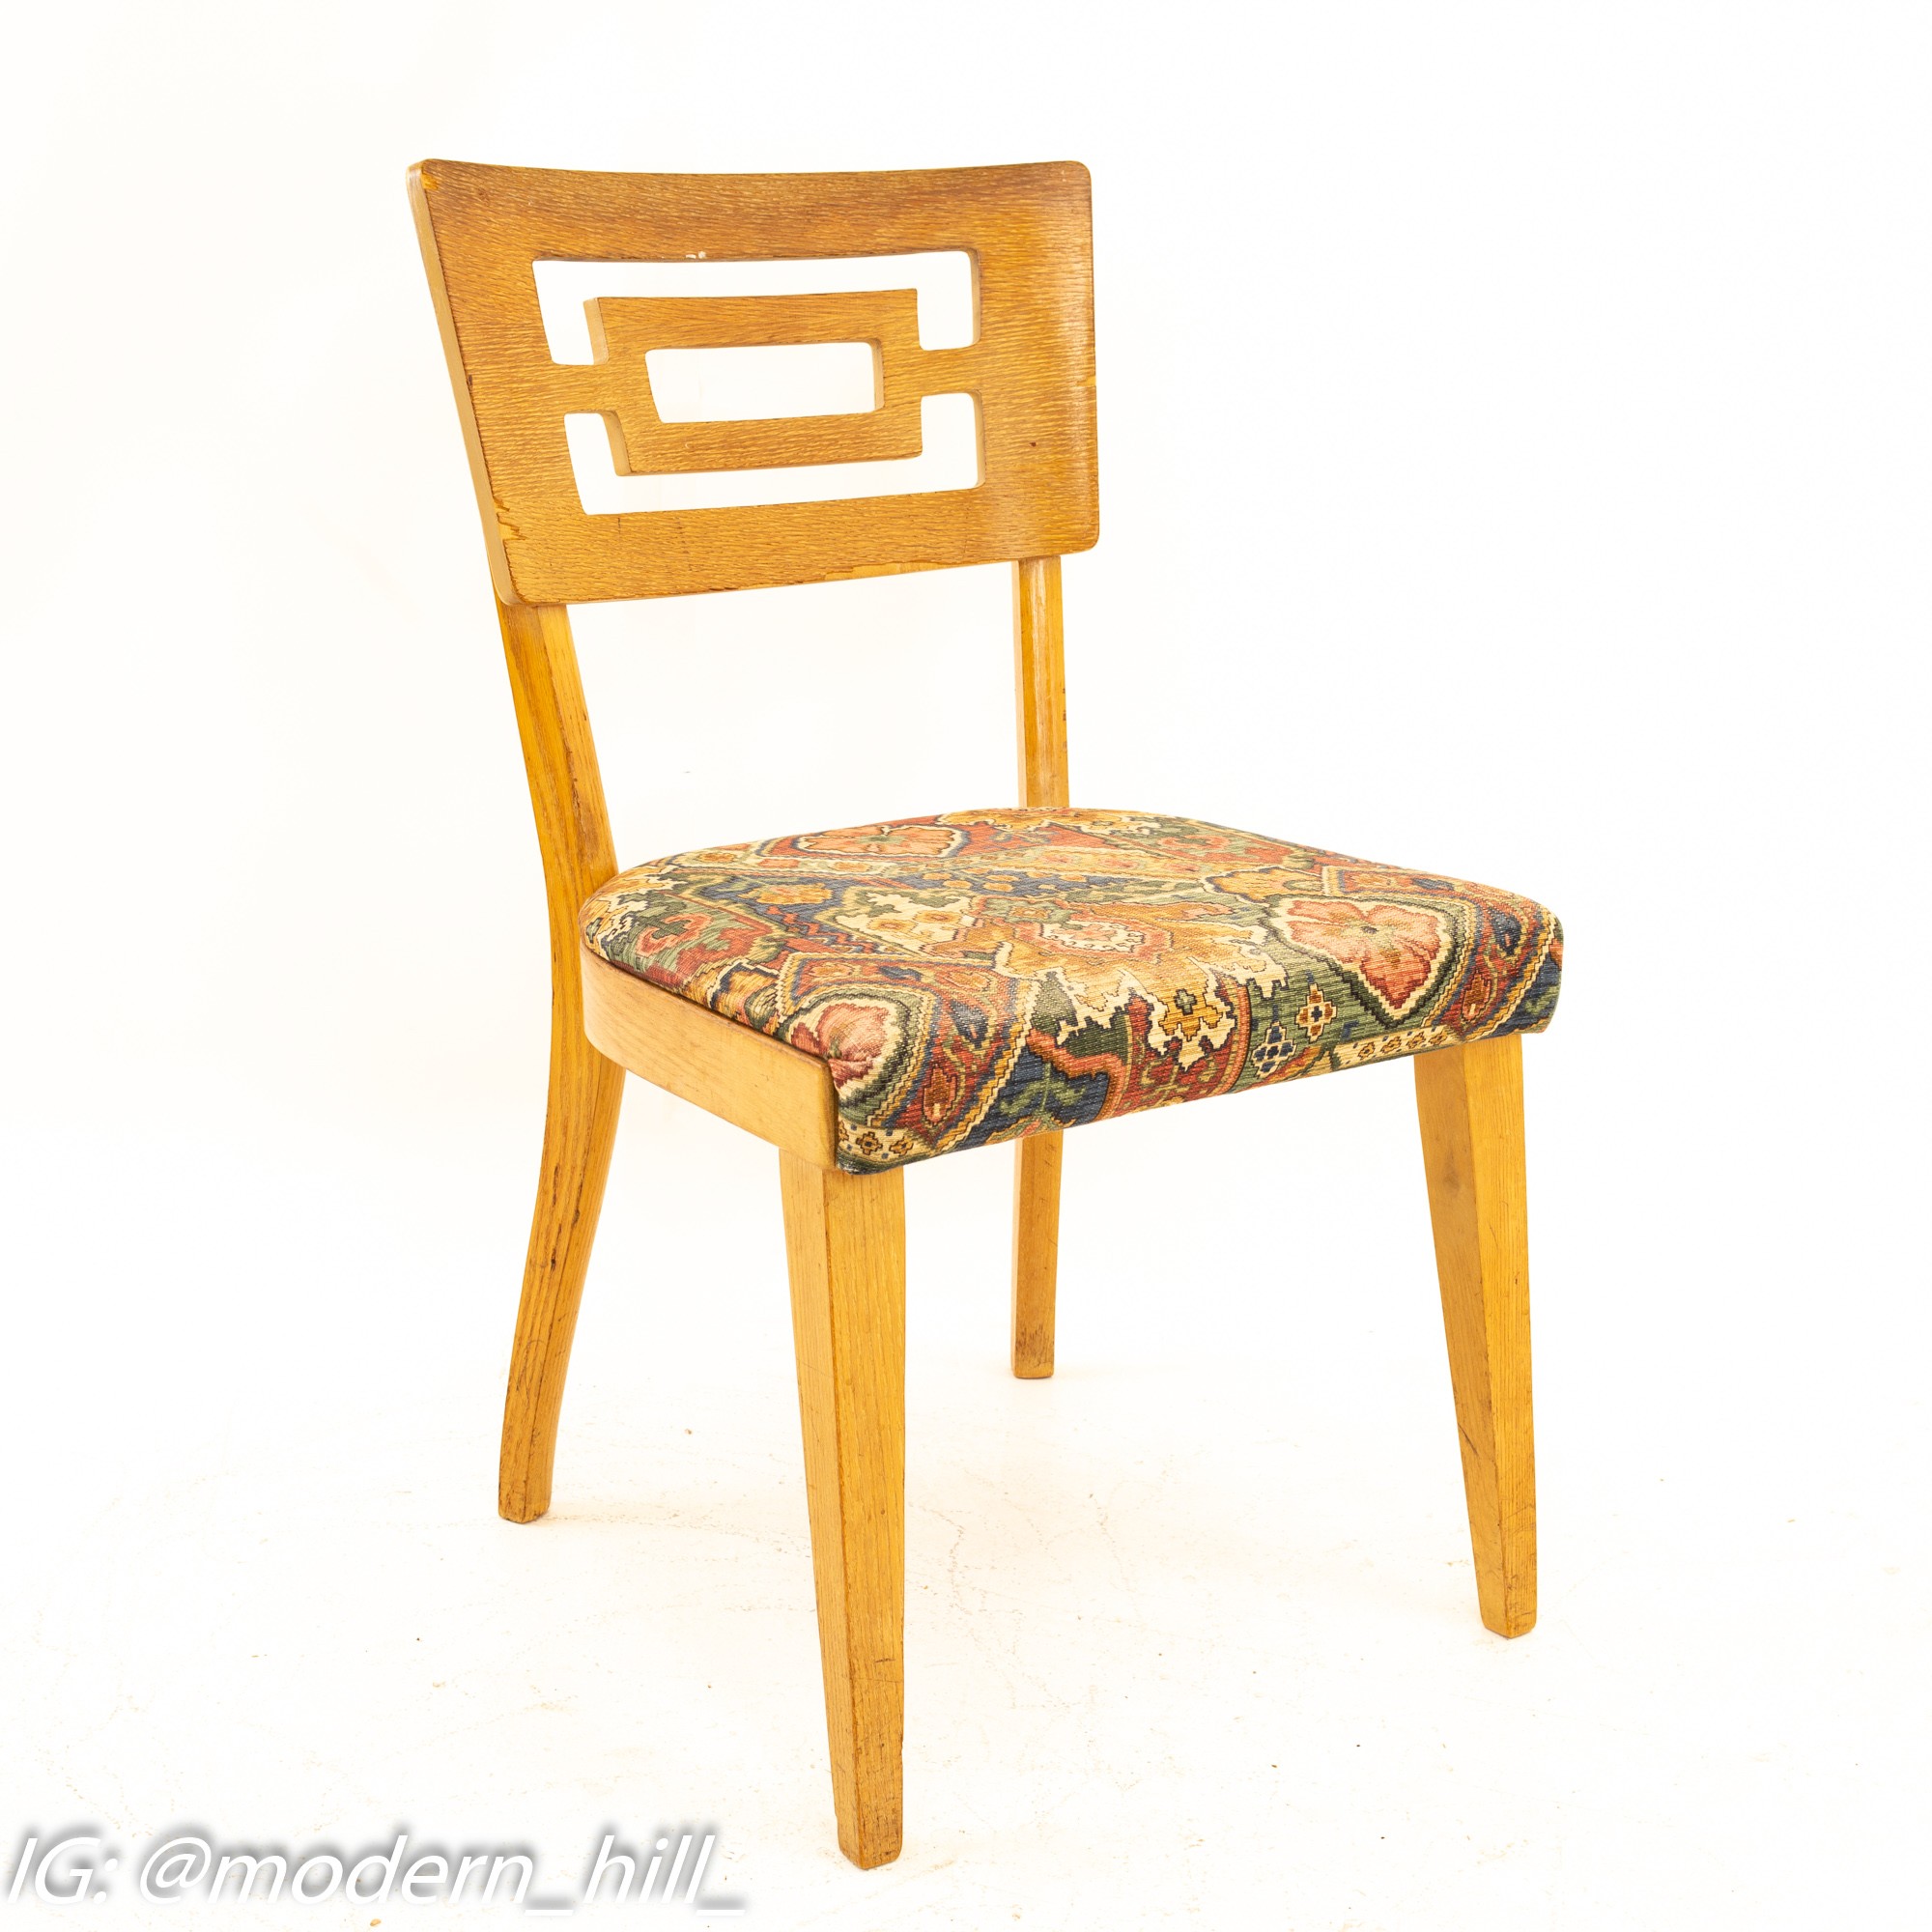 Heywood-wakefield Style Richardson Furniture Mid Century Dining Chairs - Set of 6